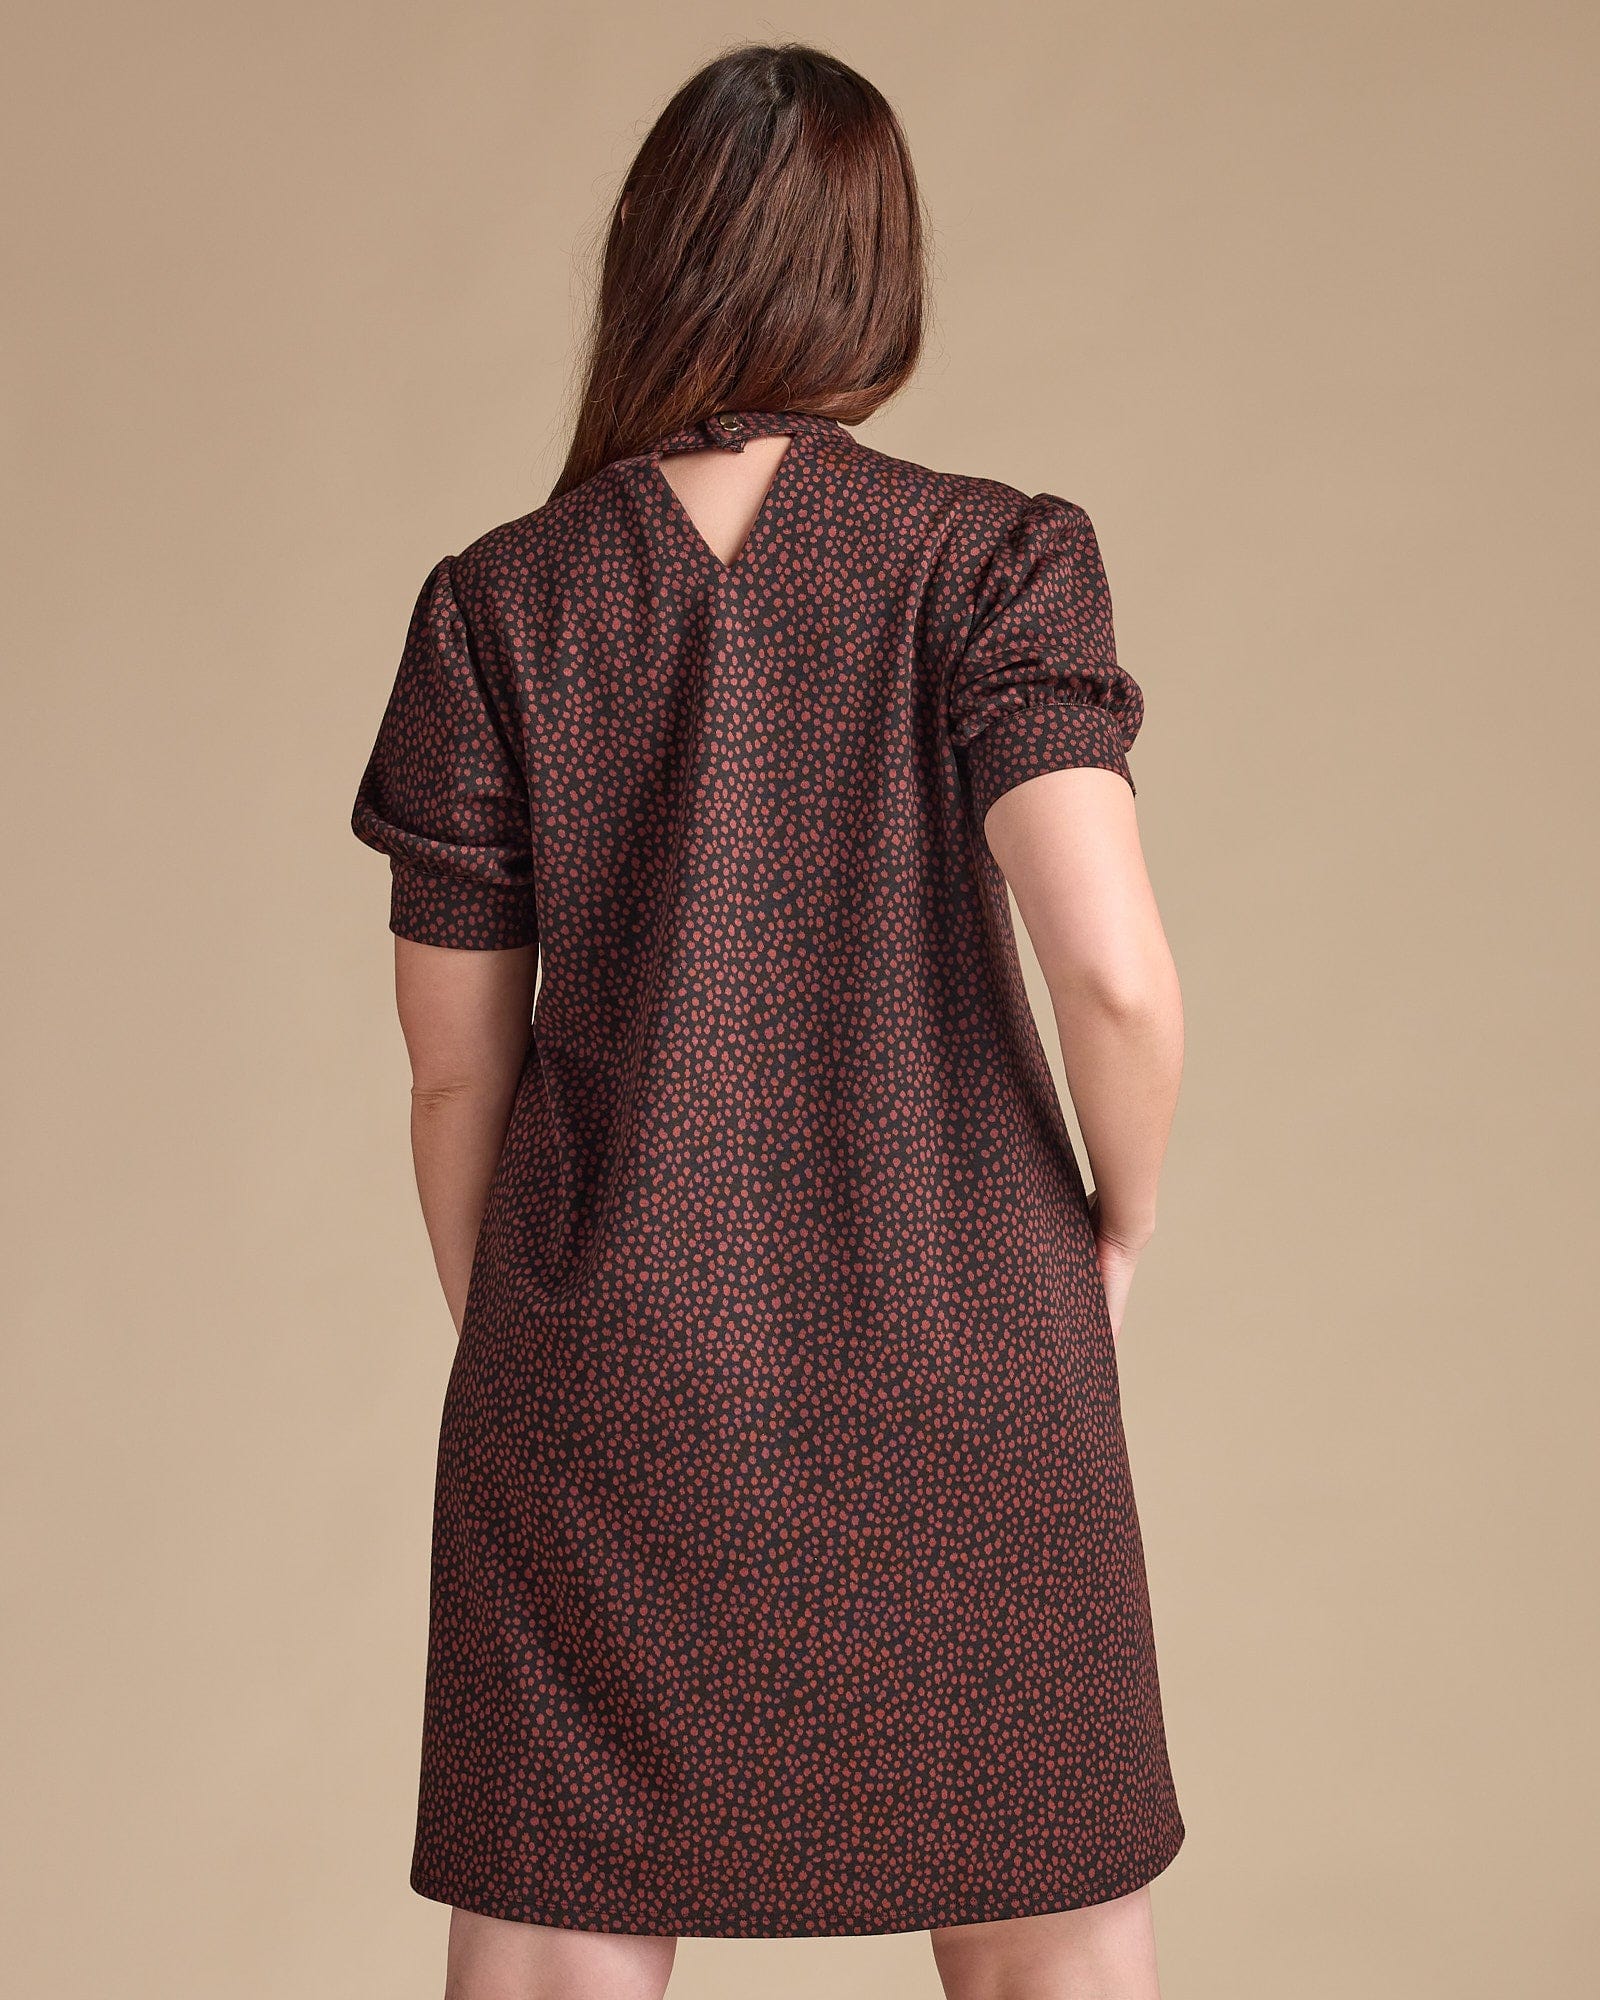 Woman in a half-sleeve, knee-length, mock-neck, brown dress